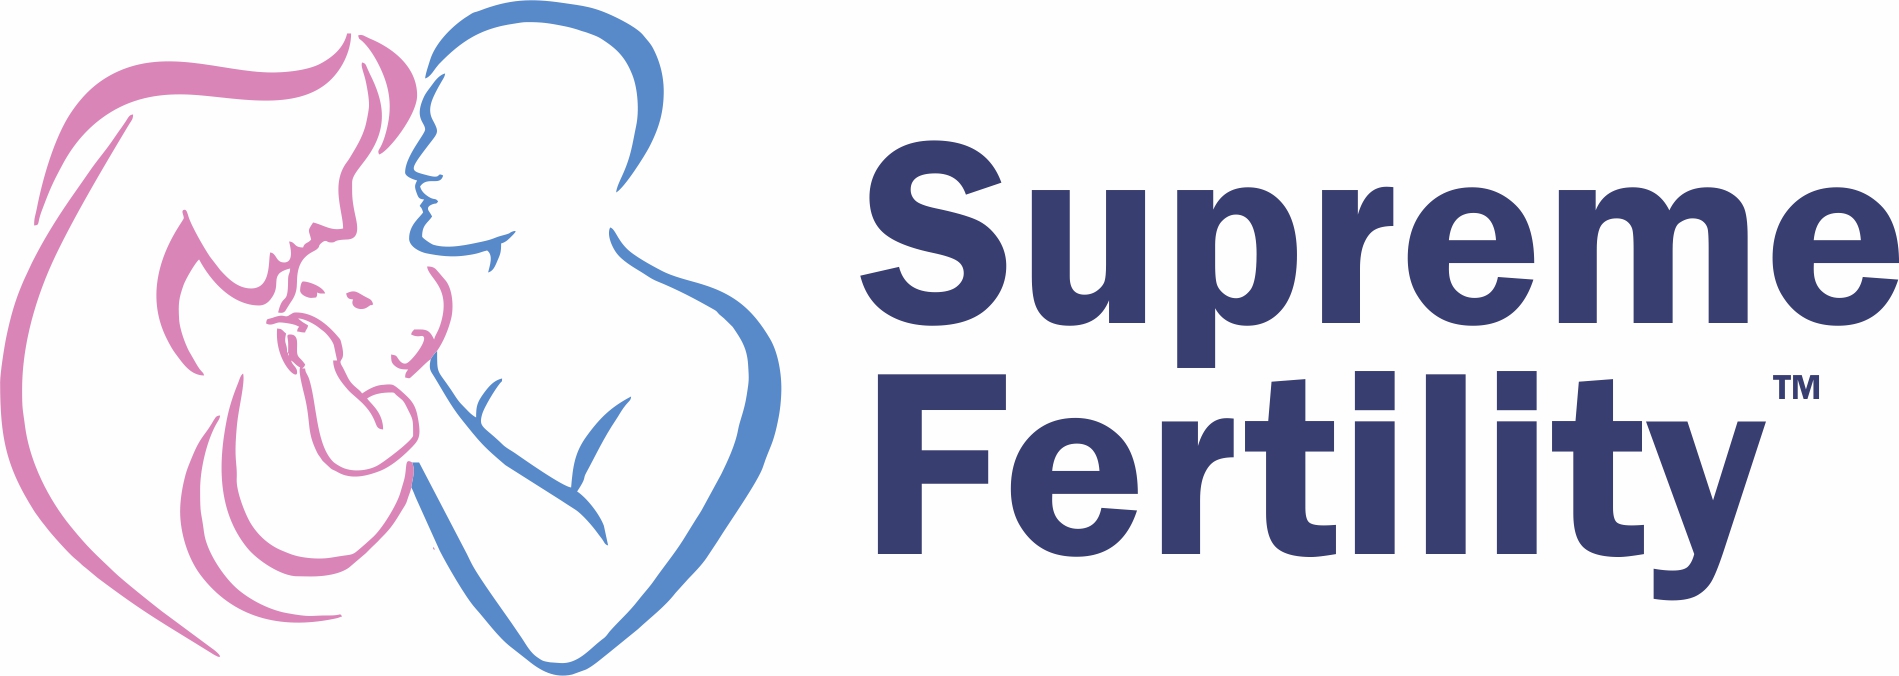 fertility-program-3--6-months